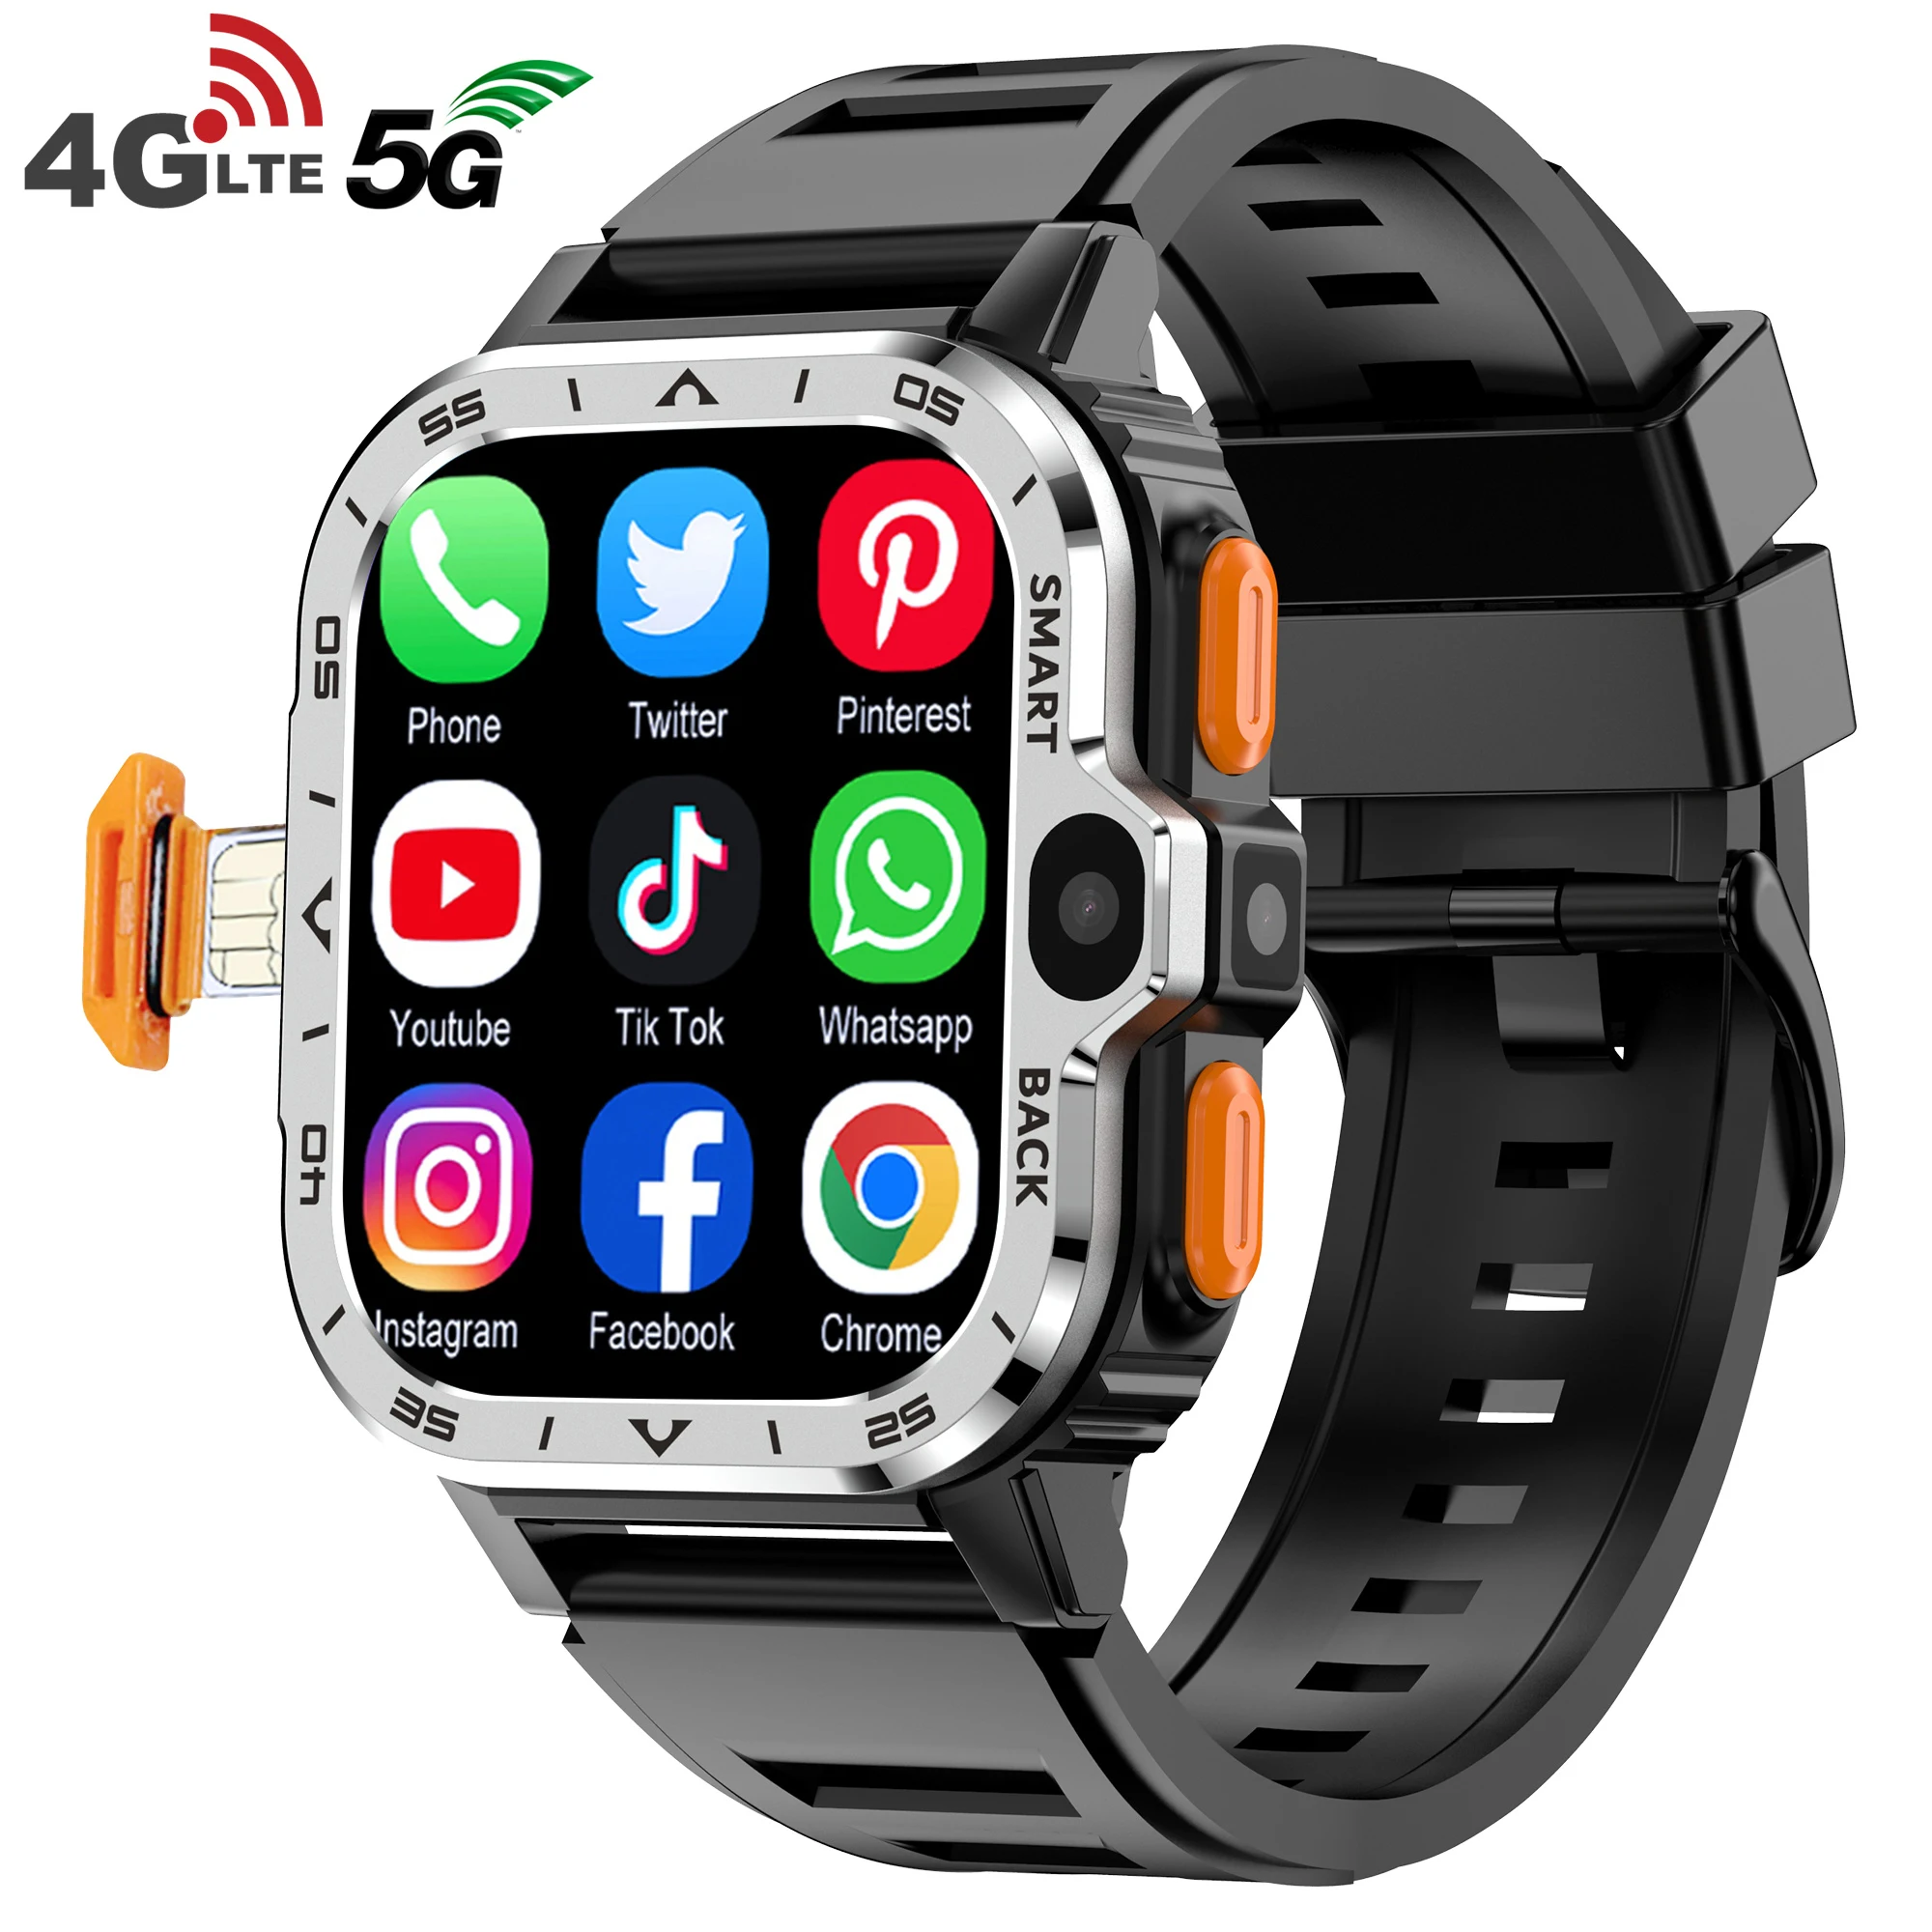 Valdus PGD Android Smart Watch Men GPS 16G/64G ROM Storage HD Dual Camera NFC 2G 4G SIM Card WIFI Wireless Fast Internet Access